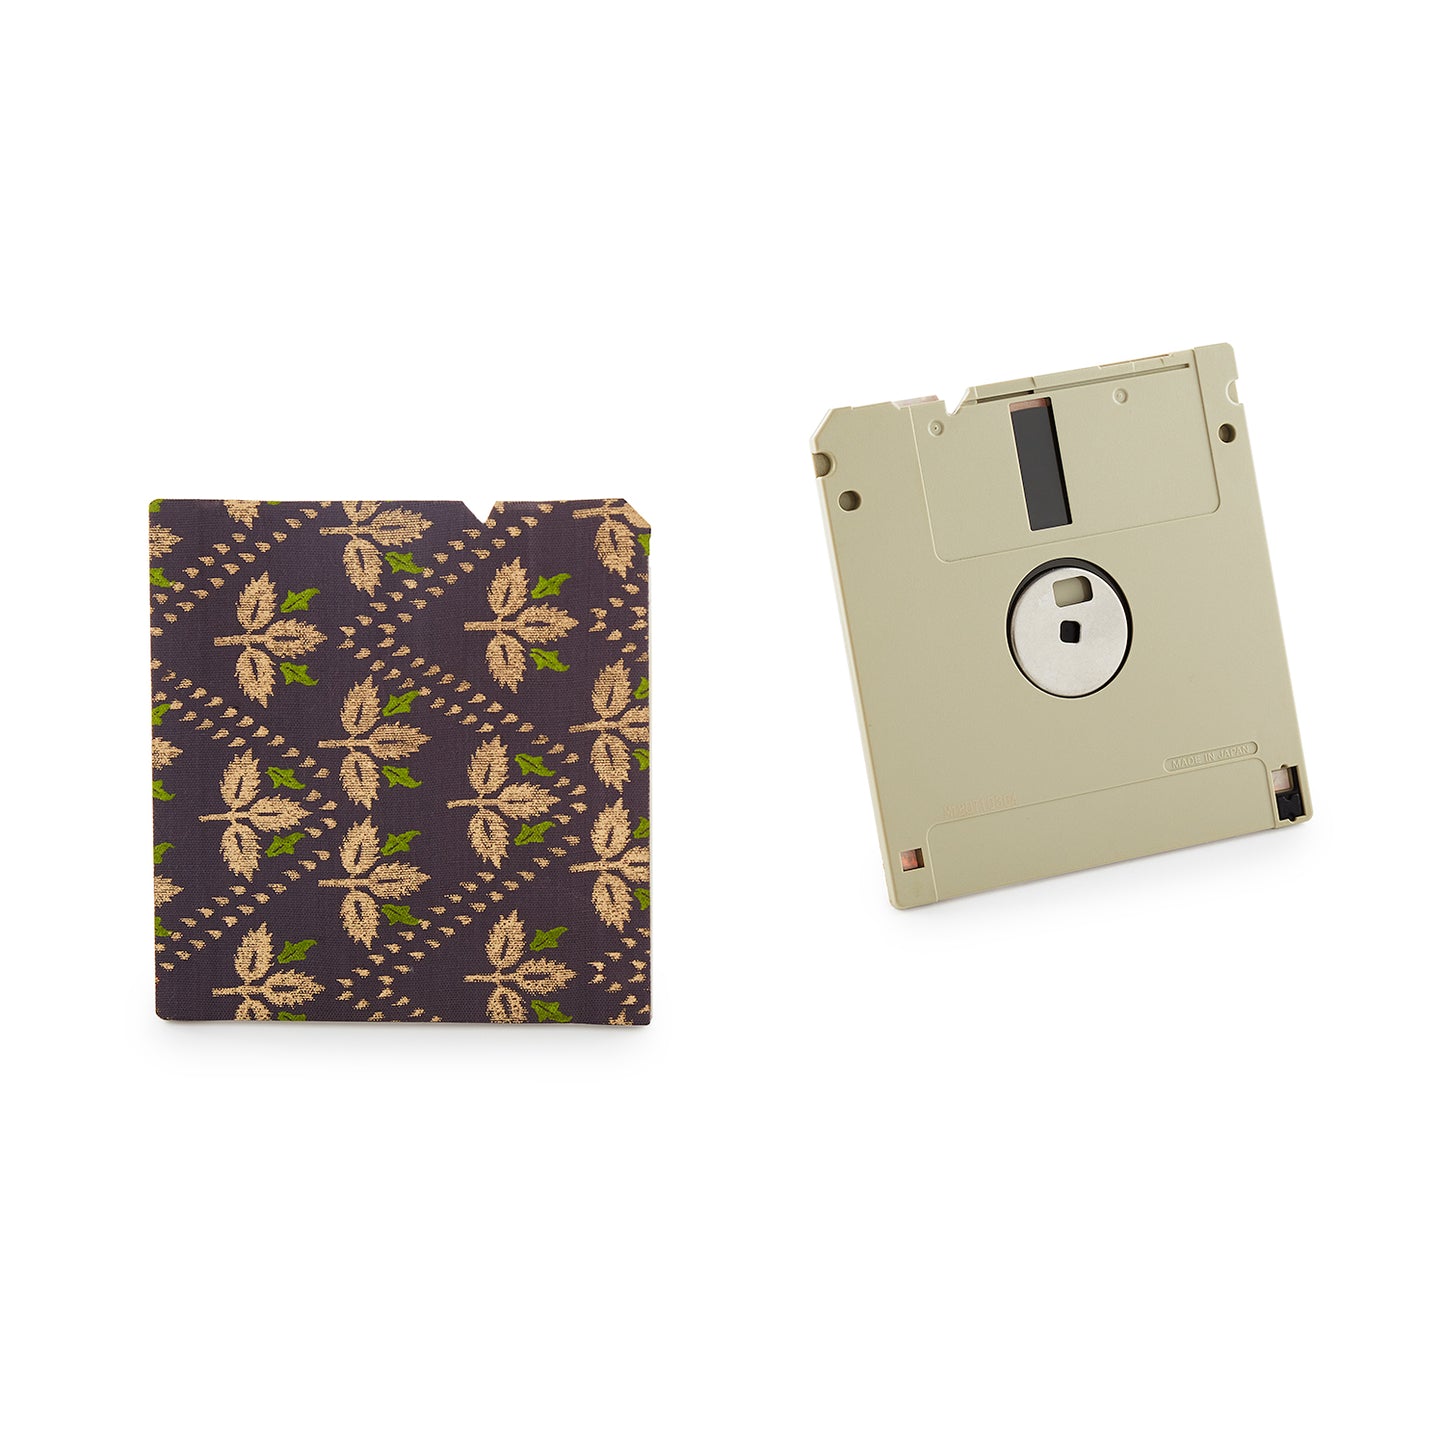 Rasin Purple - Floppy Disk Coaster Set of 2